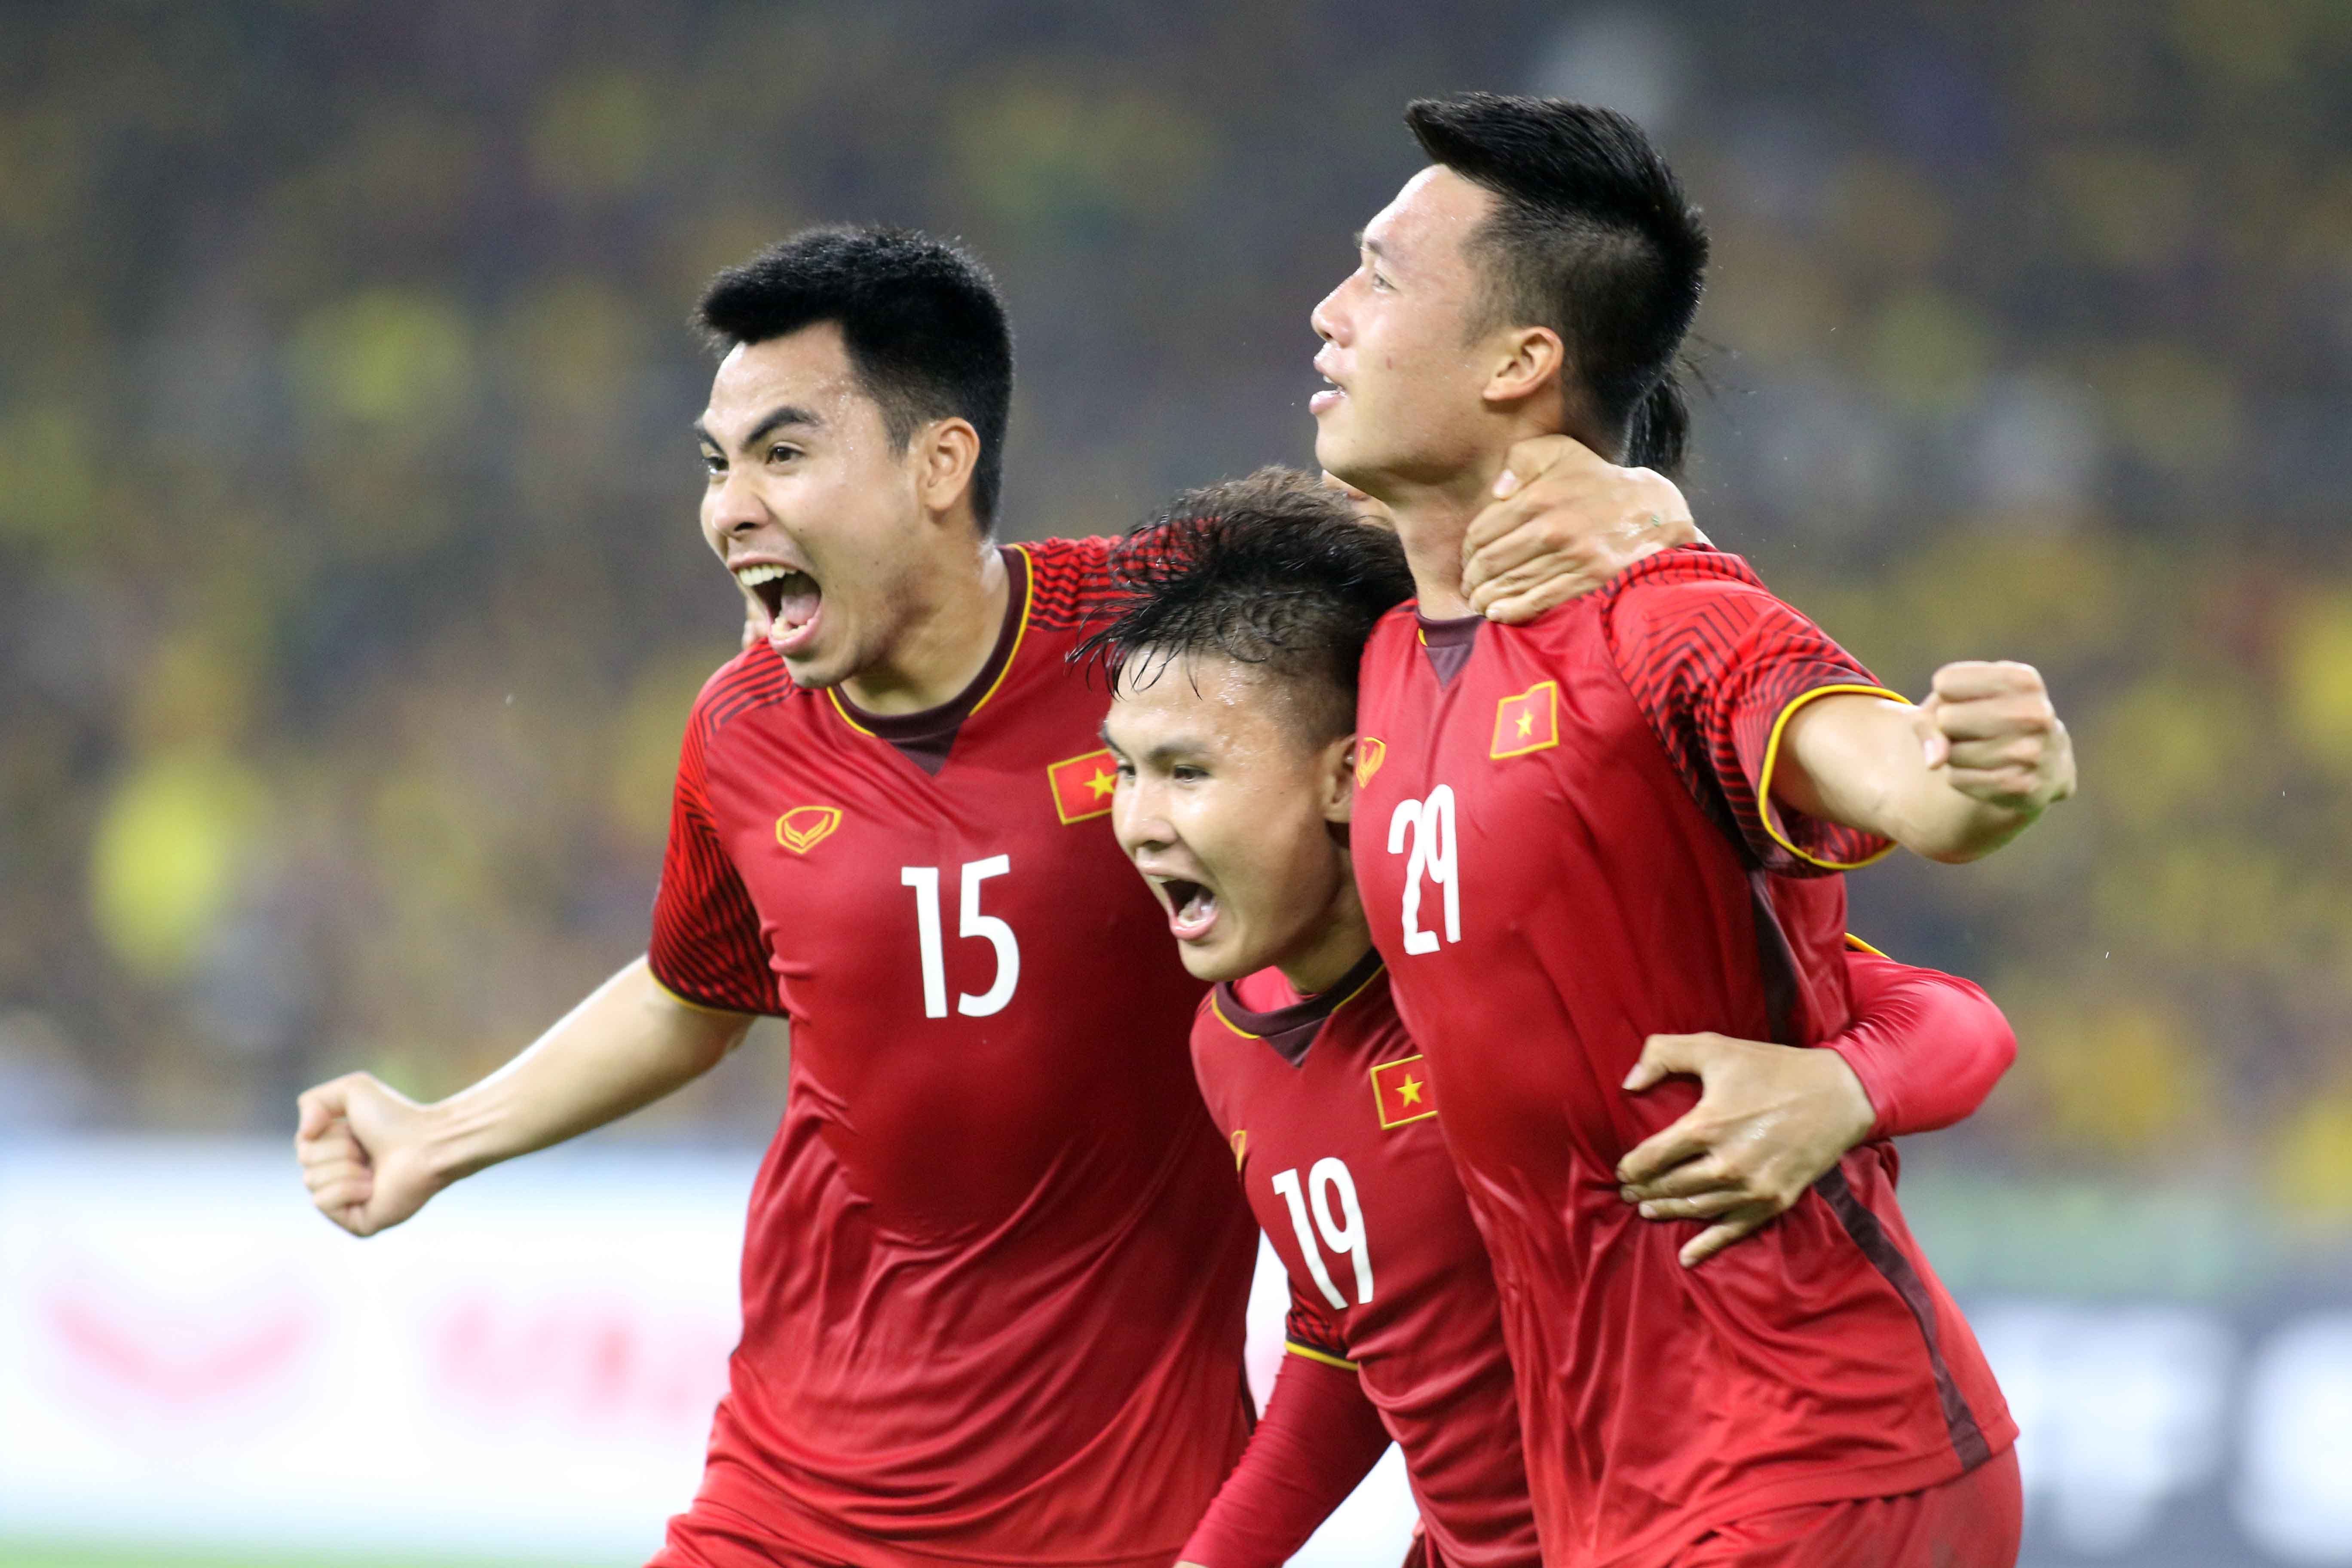 Duc Huy Quang Hai Huy Hung Vietnam Malaysia AFF Cup 2018 (2)